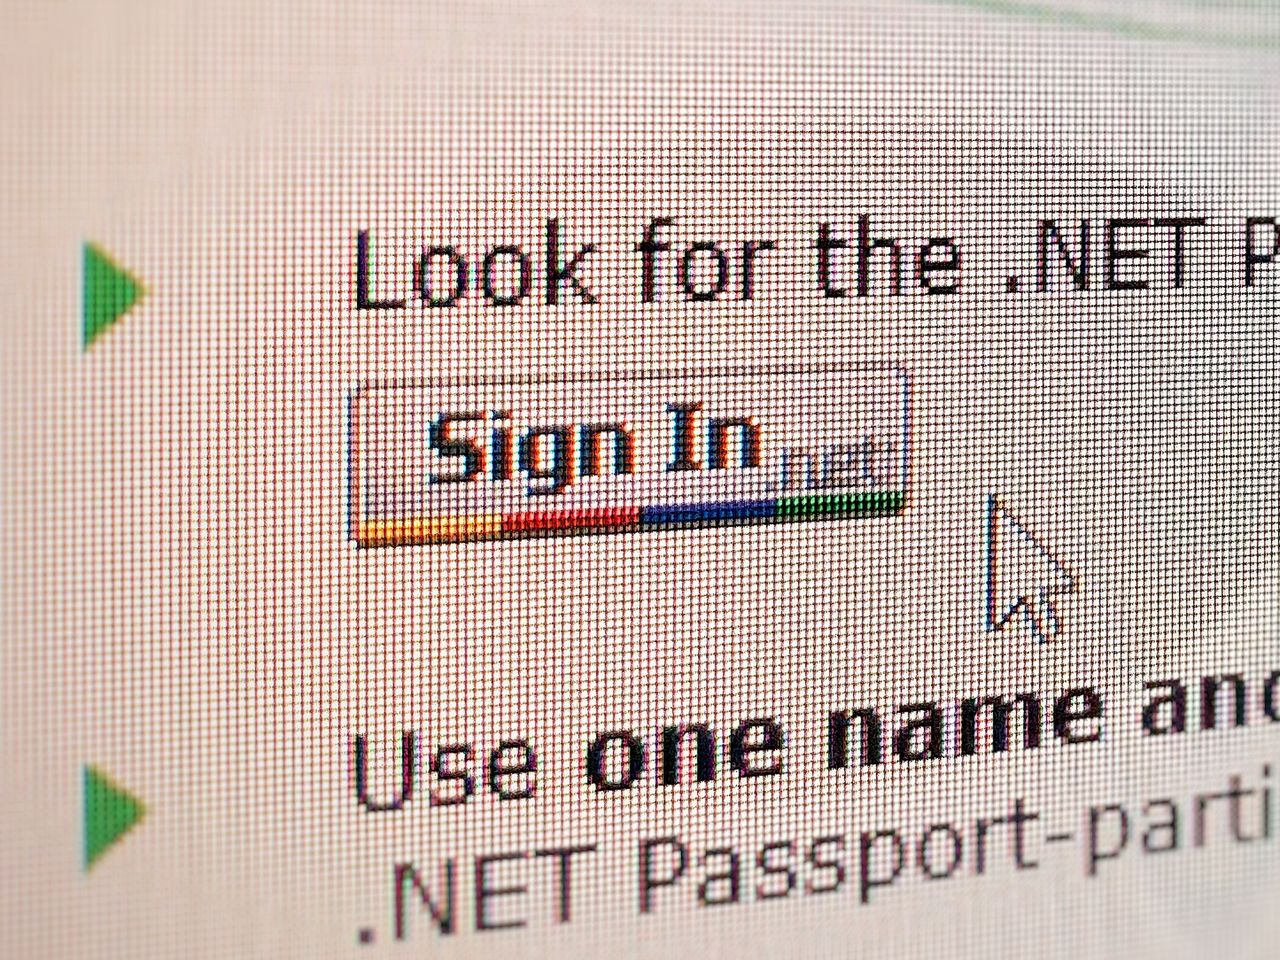 Microsoft .NET Passport (2002)
